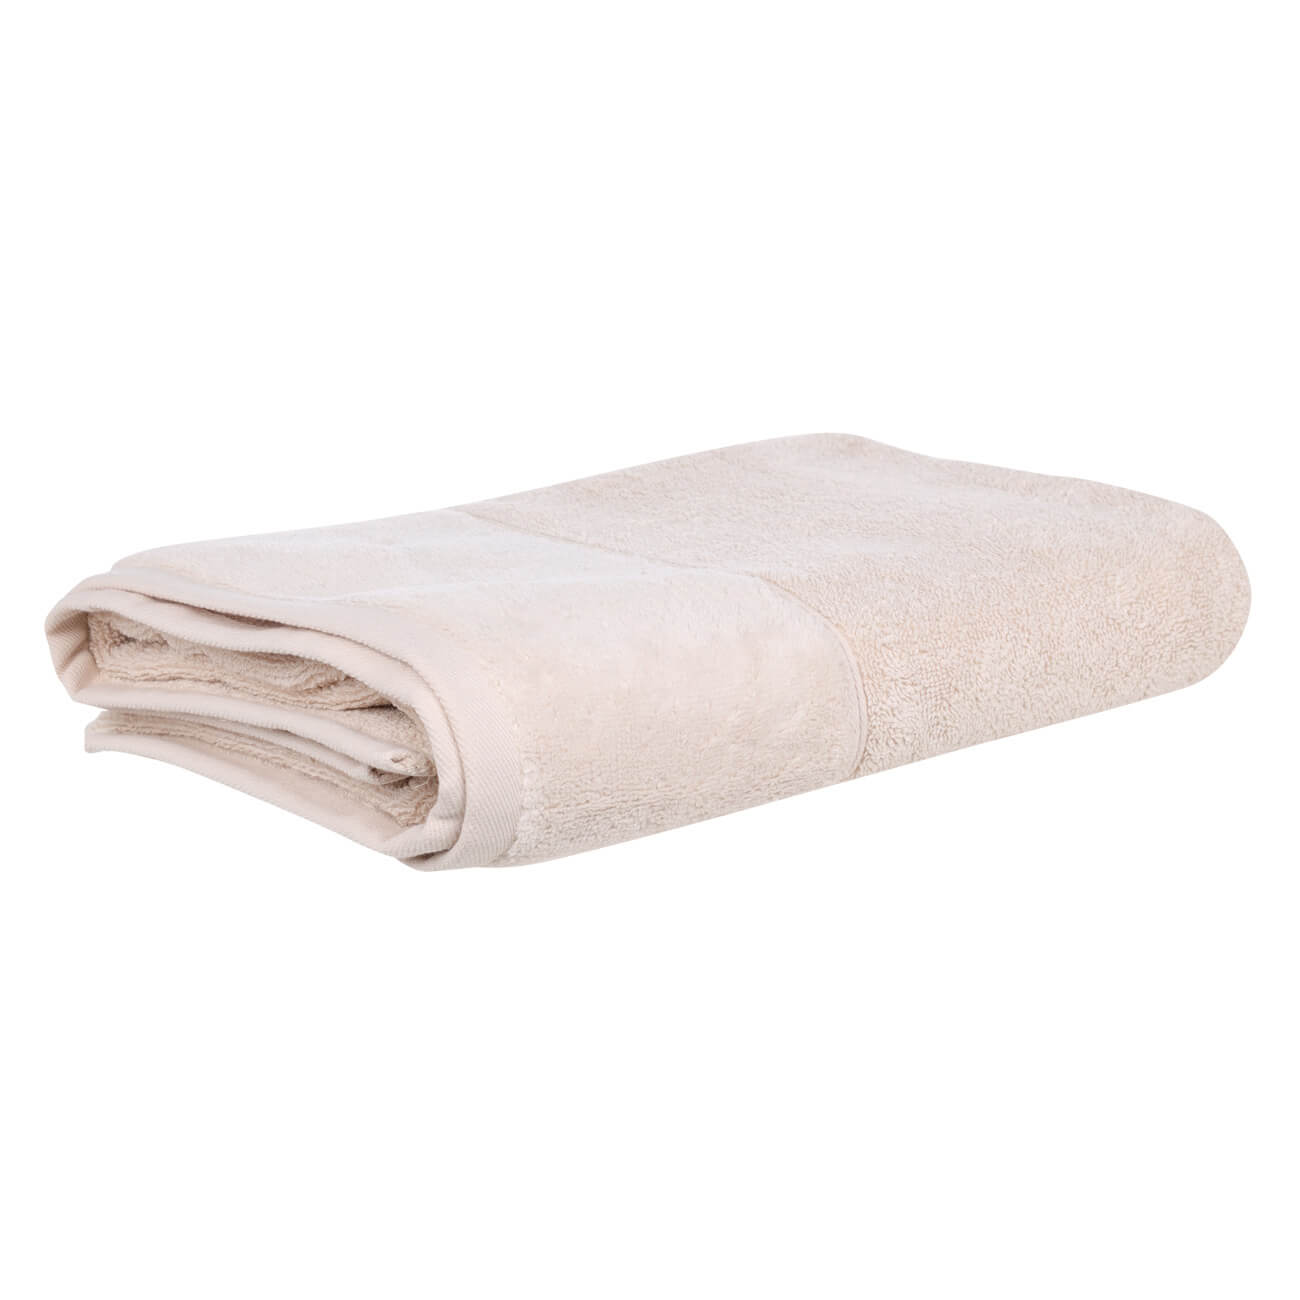 Полотенце, 70х140 см, хлопок, бежевое, Velvet touch полотенце прованс песочный р 70х140